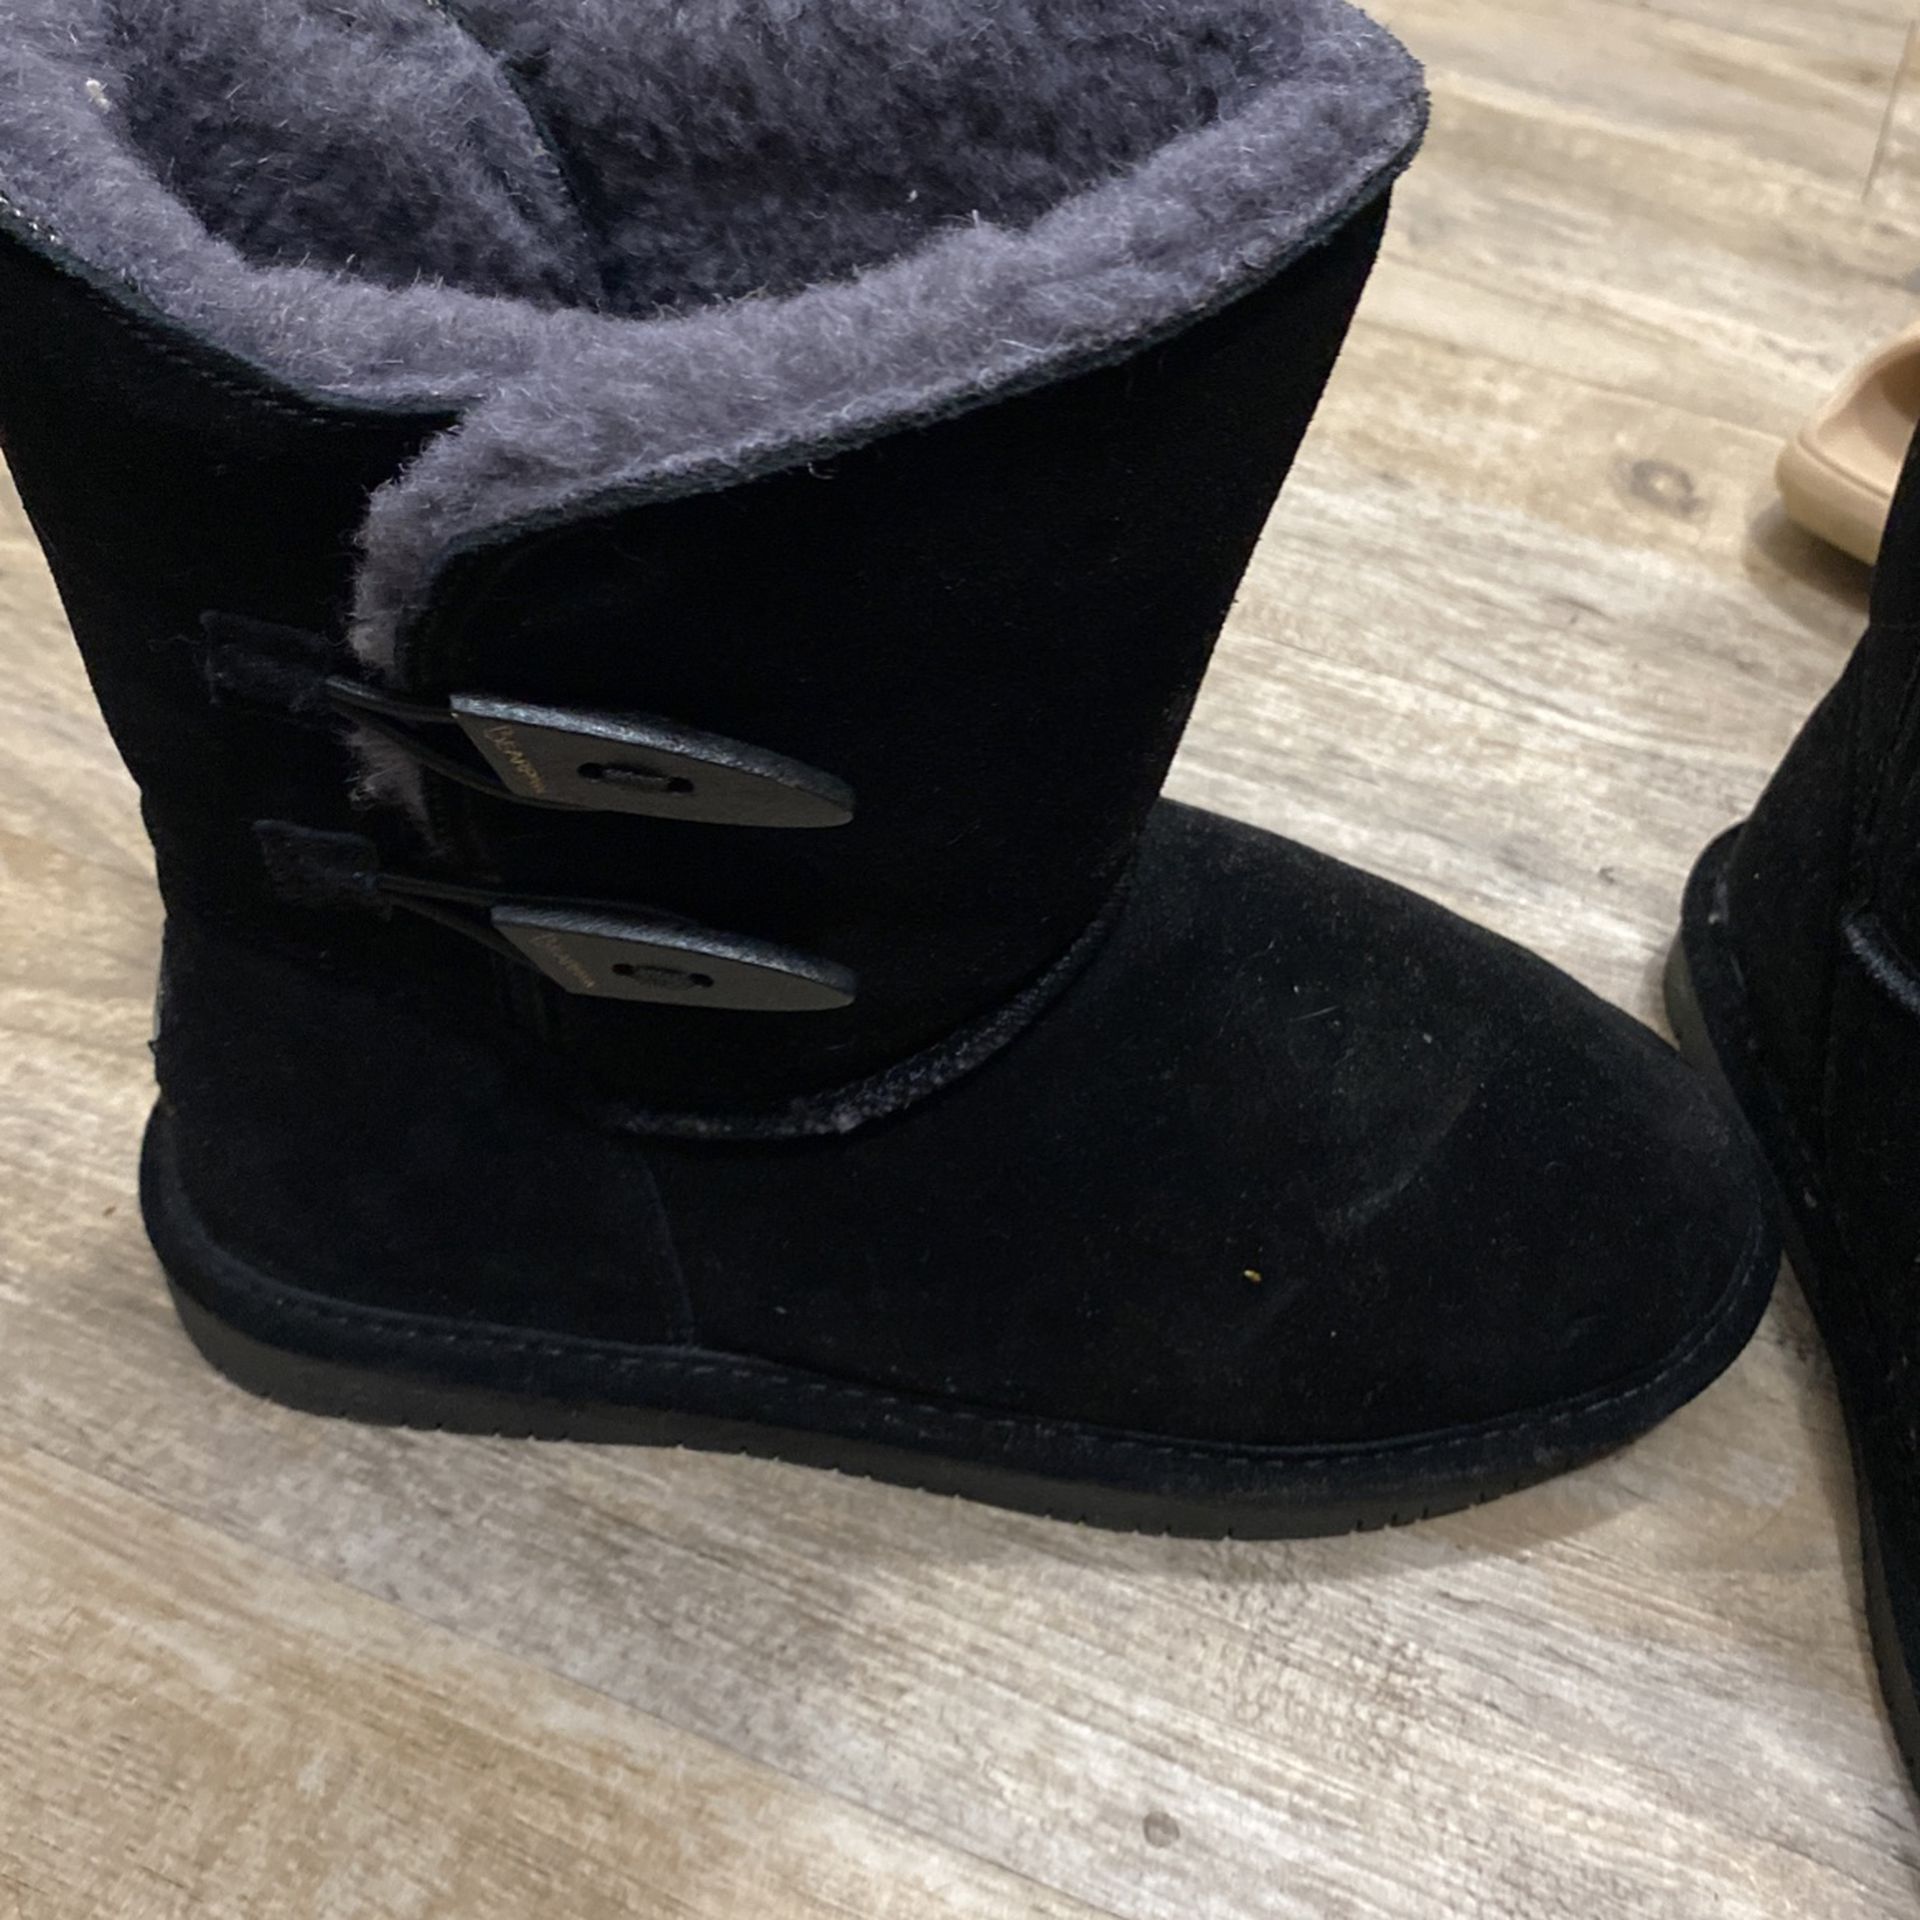 BearPaw Snow Boots, Black Size 8.5 New!